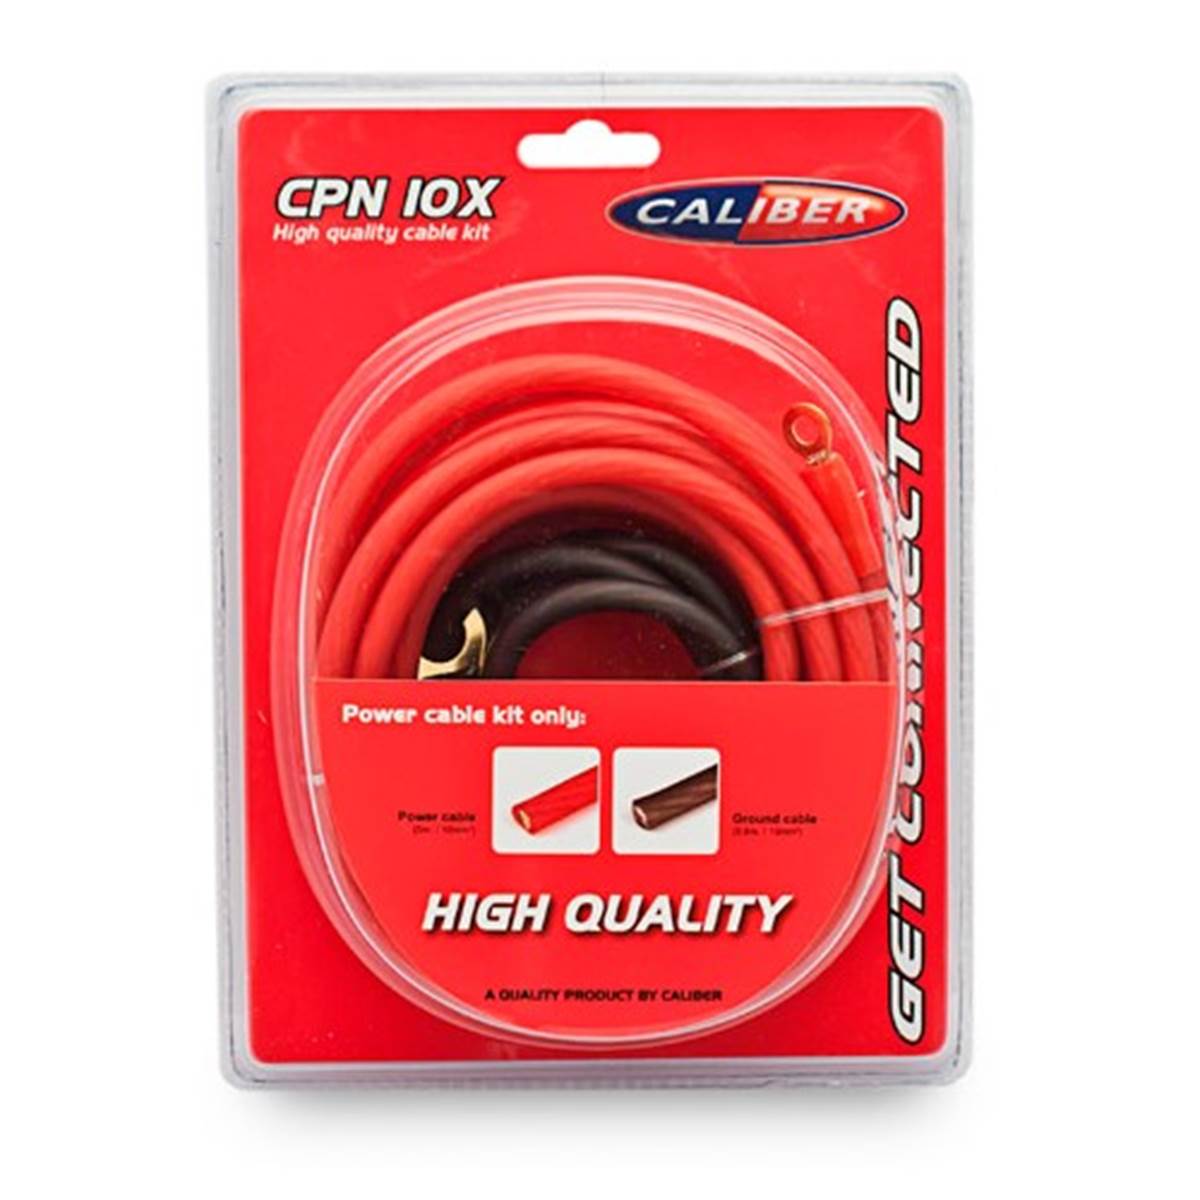 Caliber Kit cableado etapa cable rojo 5 m 10 mm